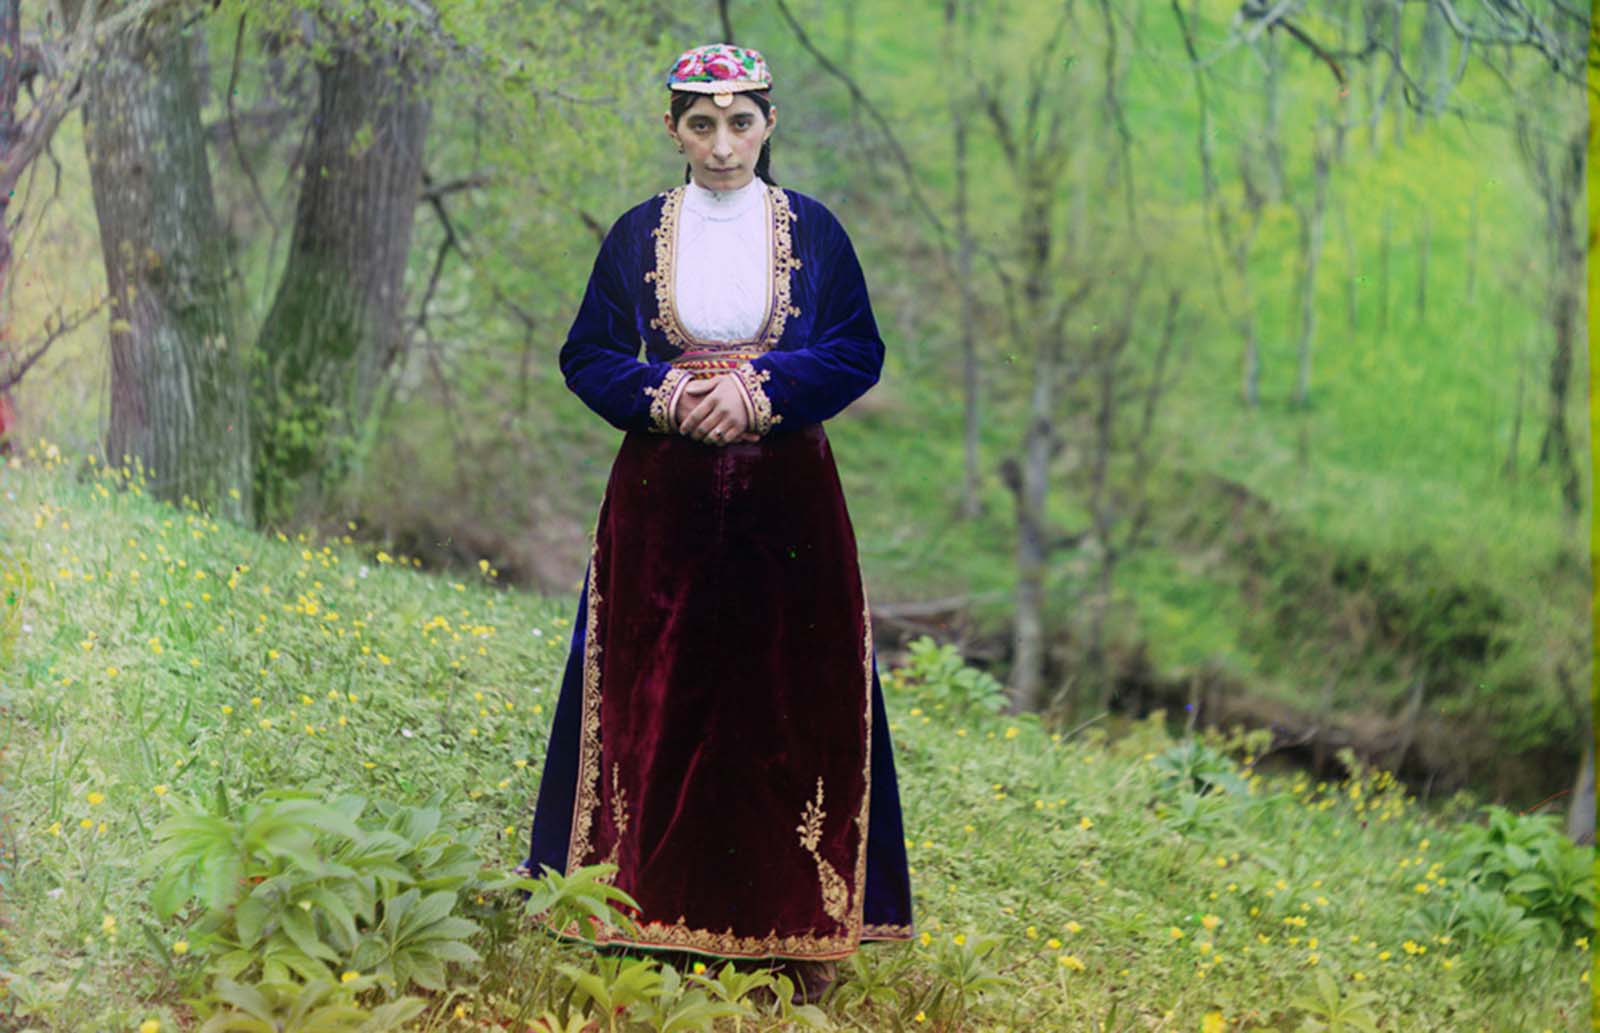 An Armenian woman in national costume poses for Prokudin-Gorskii on a hillside near Artvin (in present day Turkey), 1910.